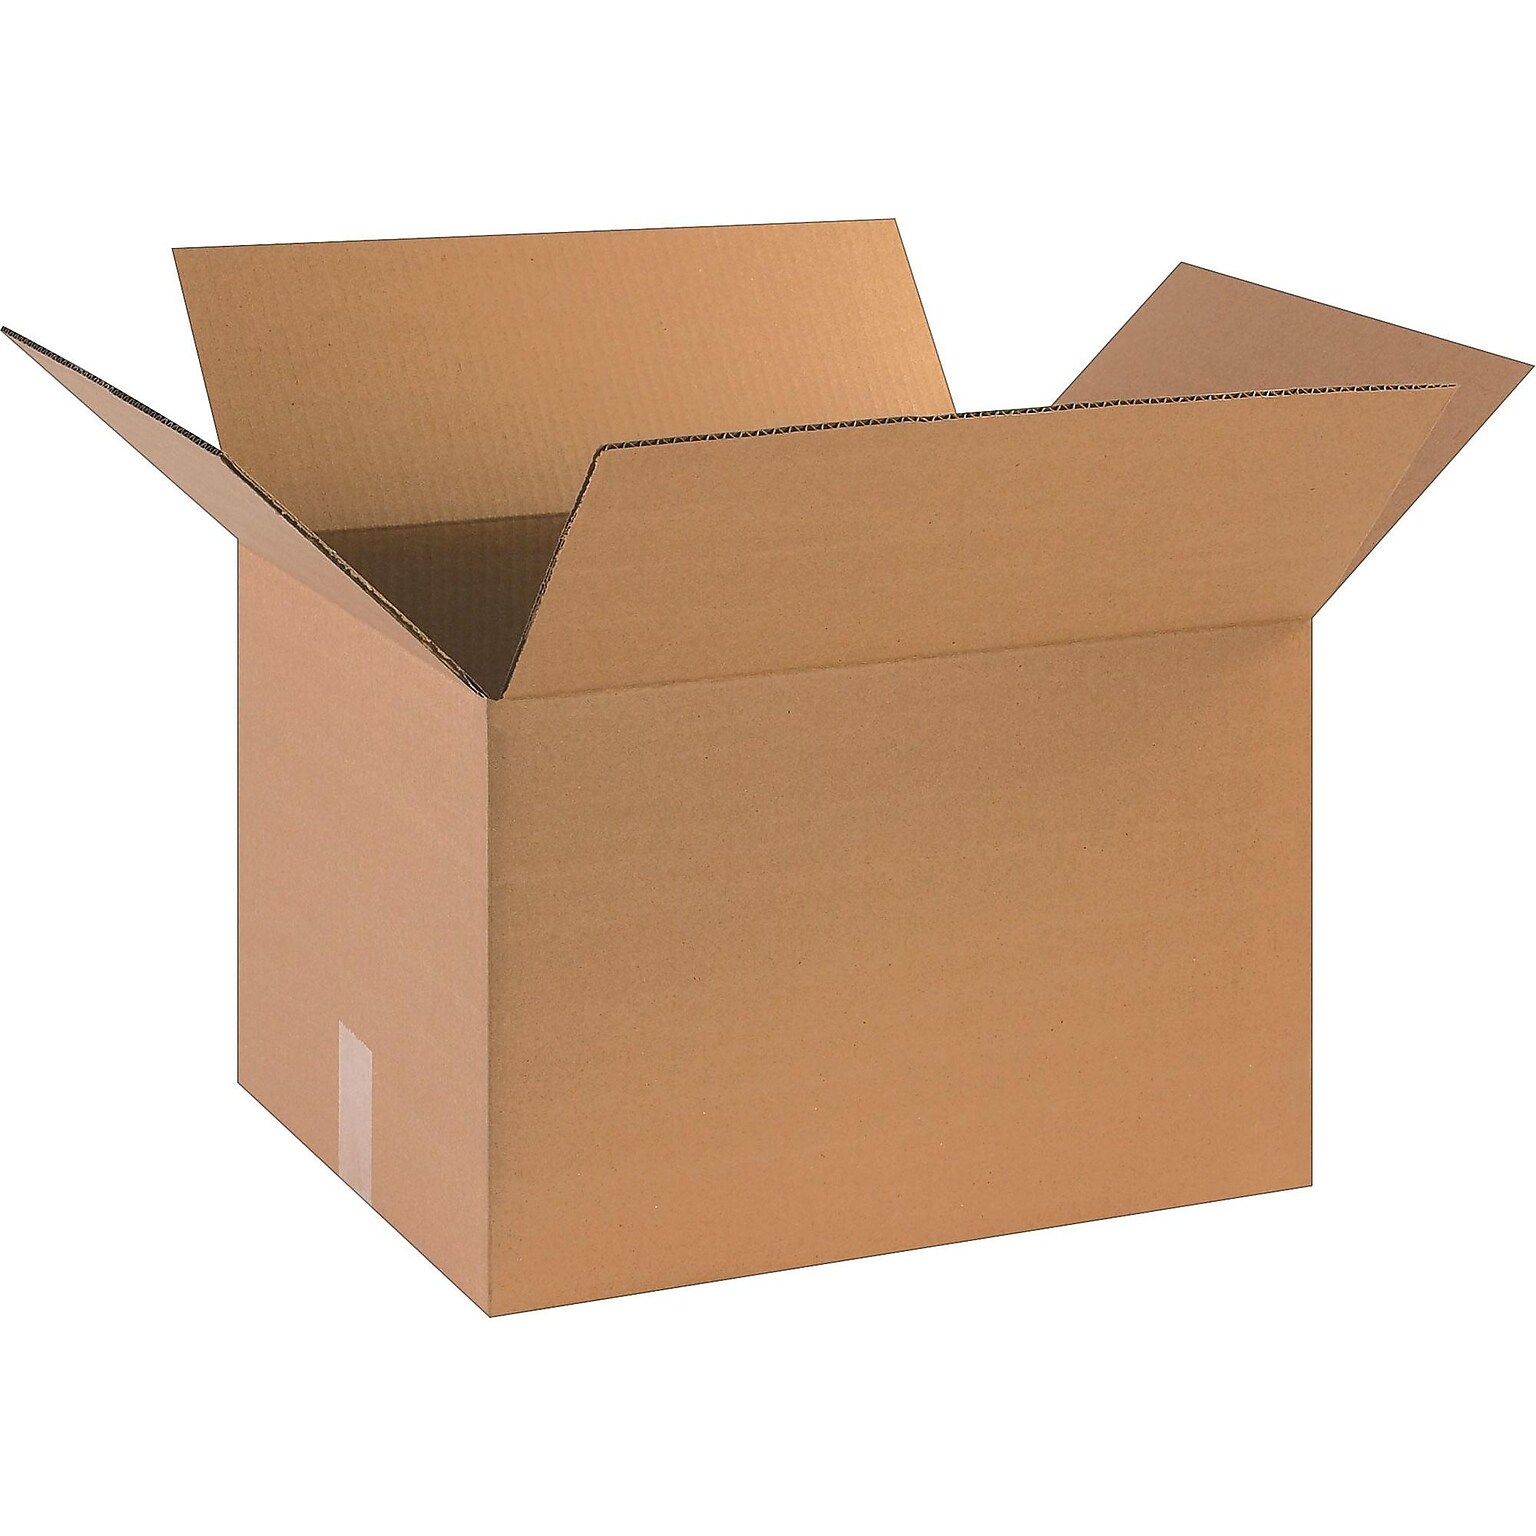 18 x 14 x 12, 32 ECT, Shipping Boxes, 25/Bundle (CW57290)